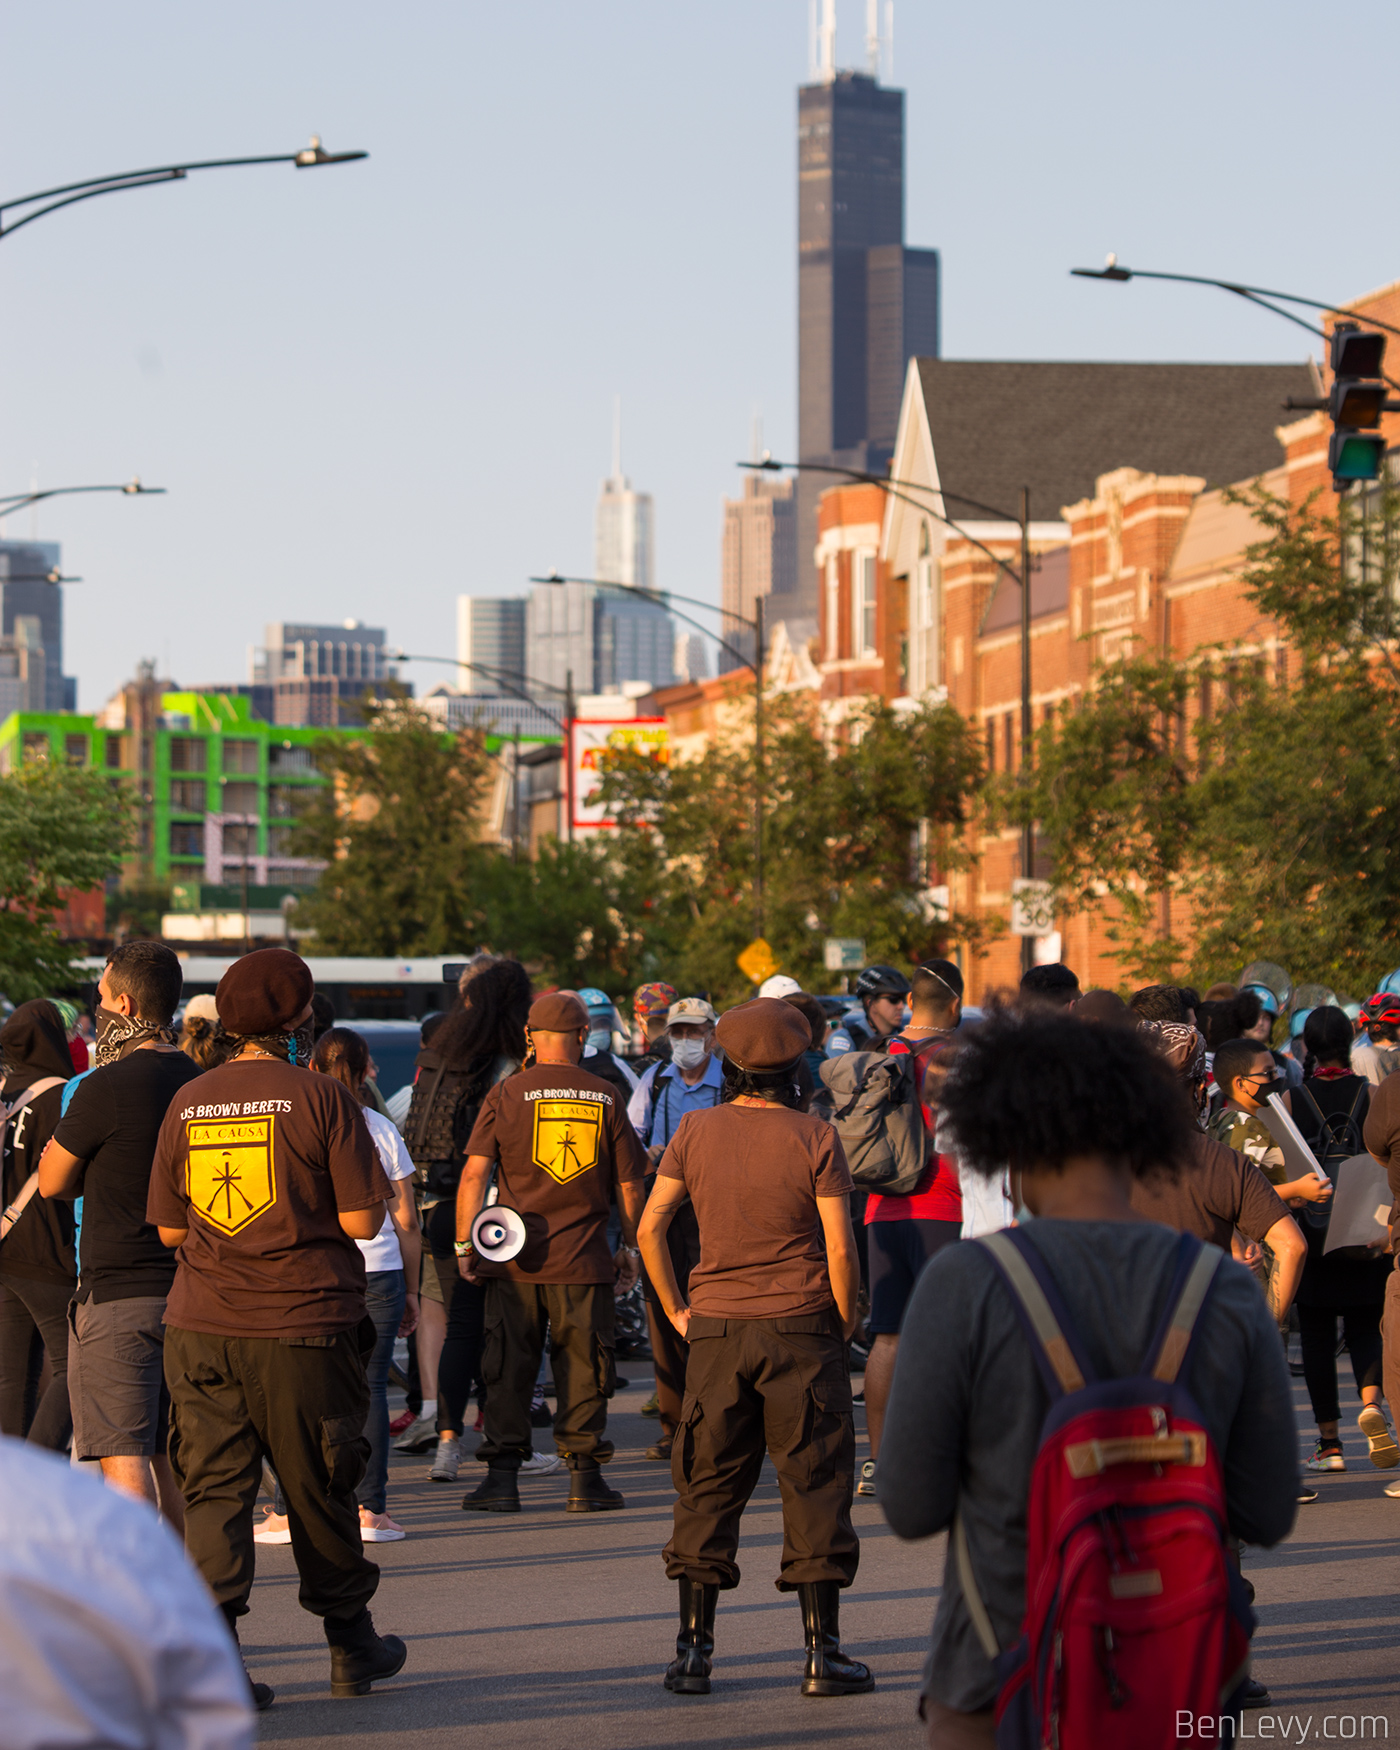 Los Brown Berets Protestors in Pilsen, Chicago